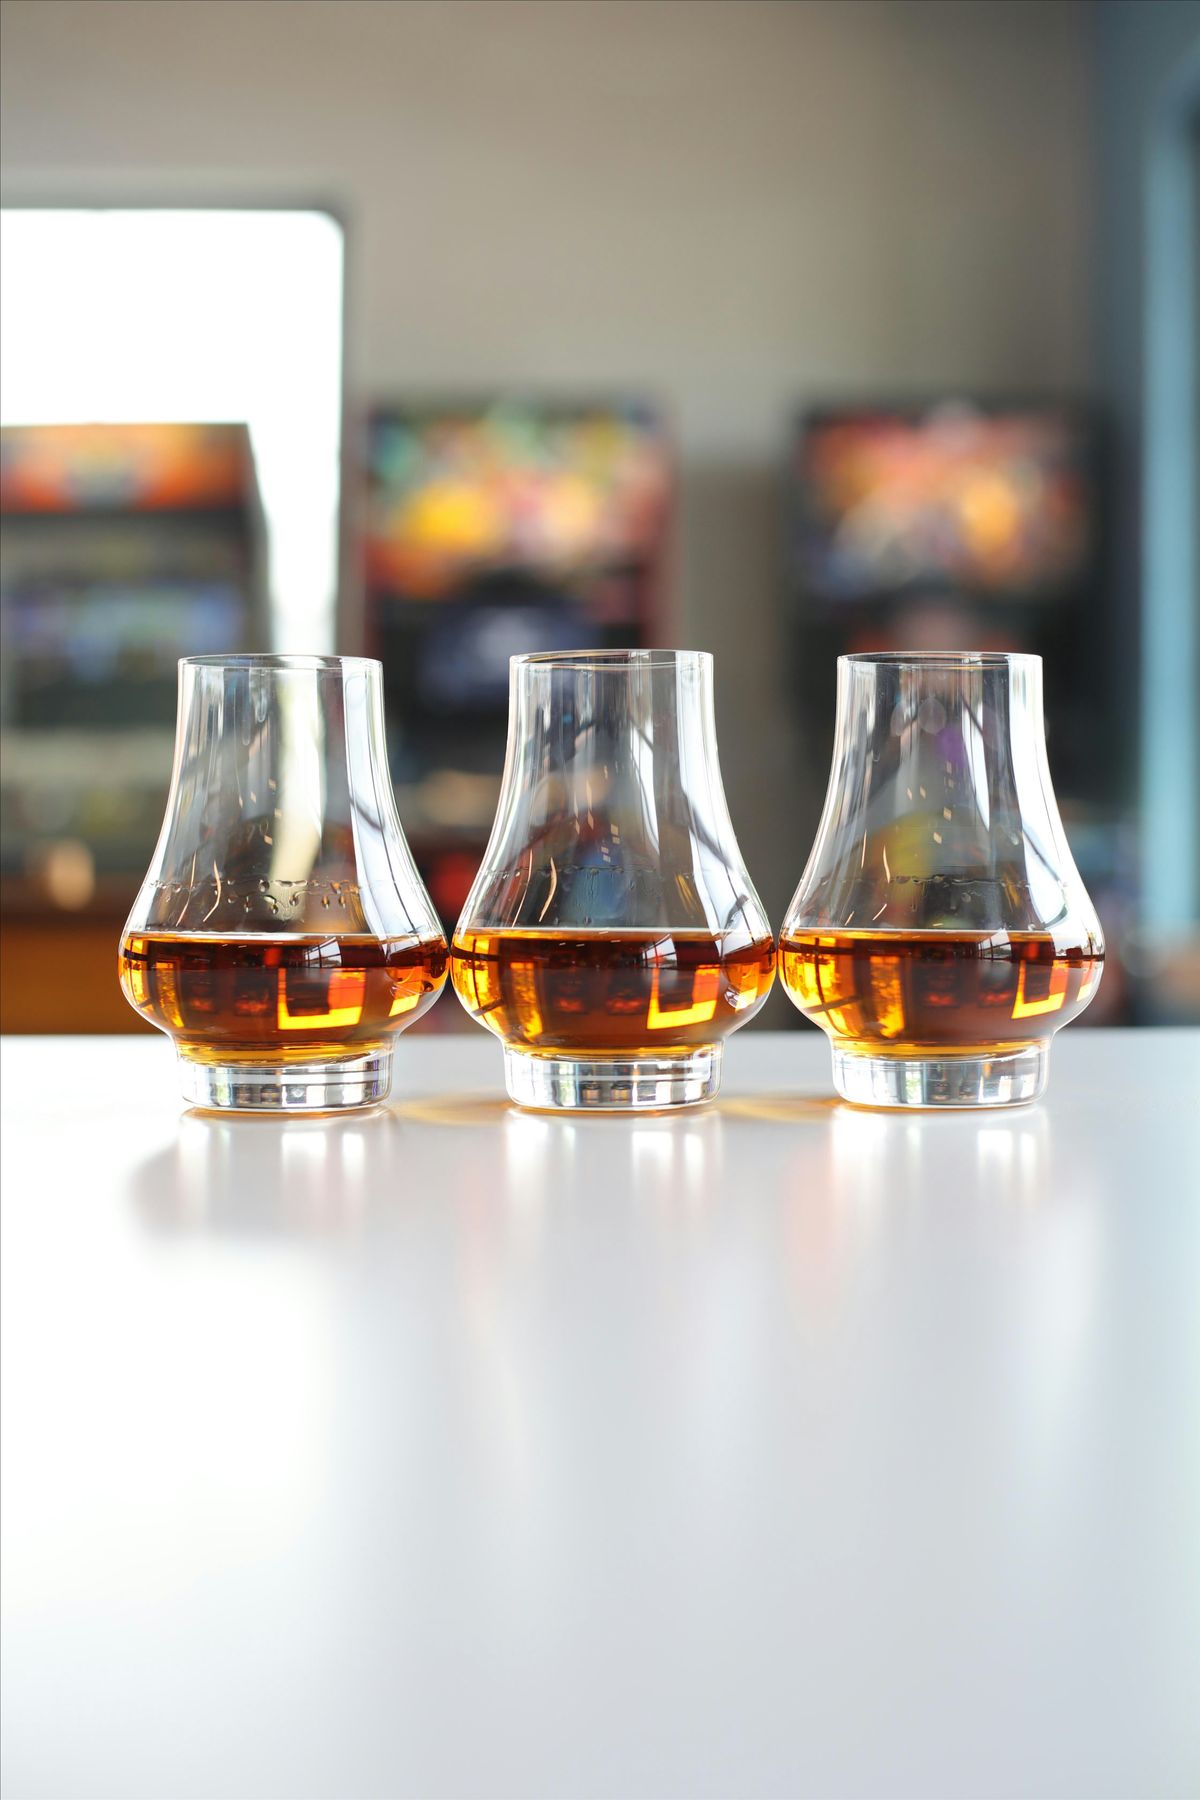 Aslin Barrel Pick Bourbon Tasting Experience